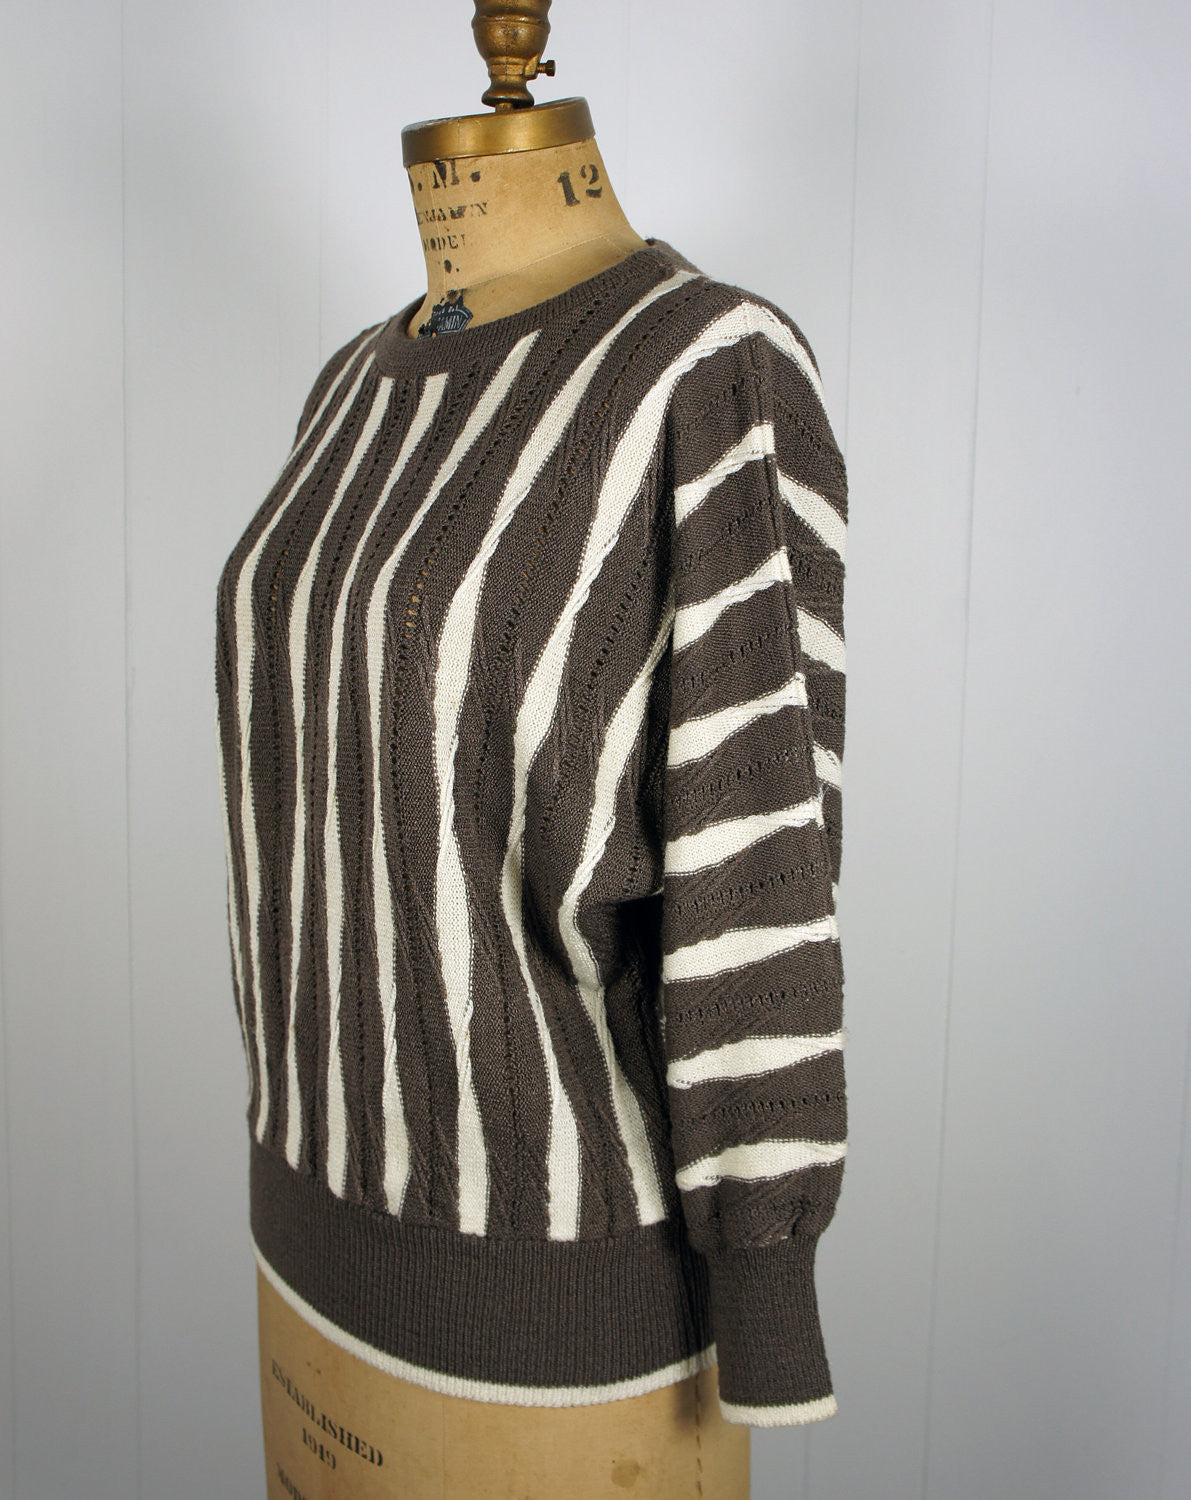 1980's Brown & White Striped Eyelet Knit Sweater, Size M / L